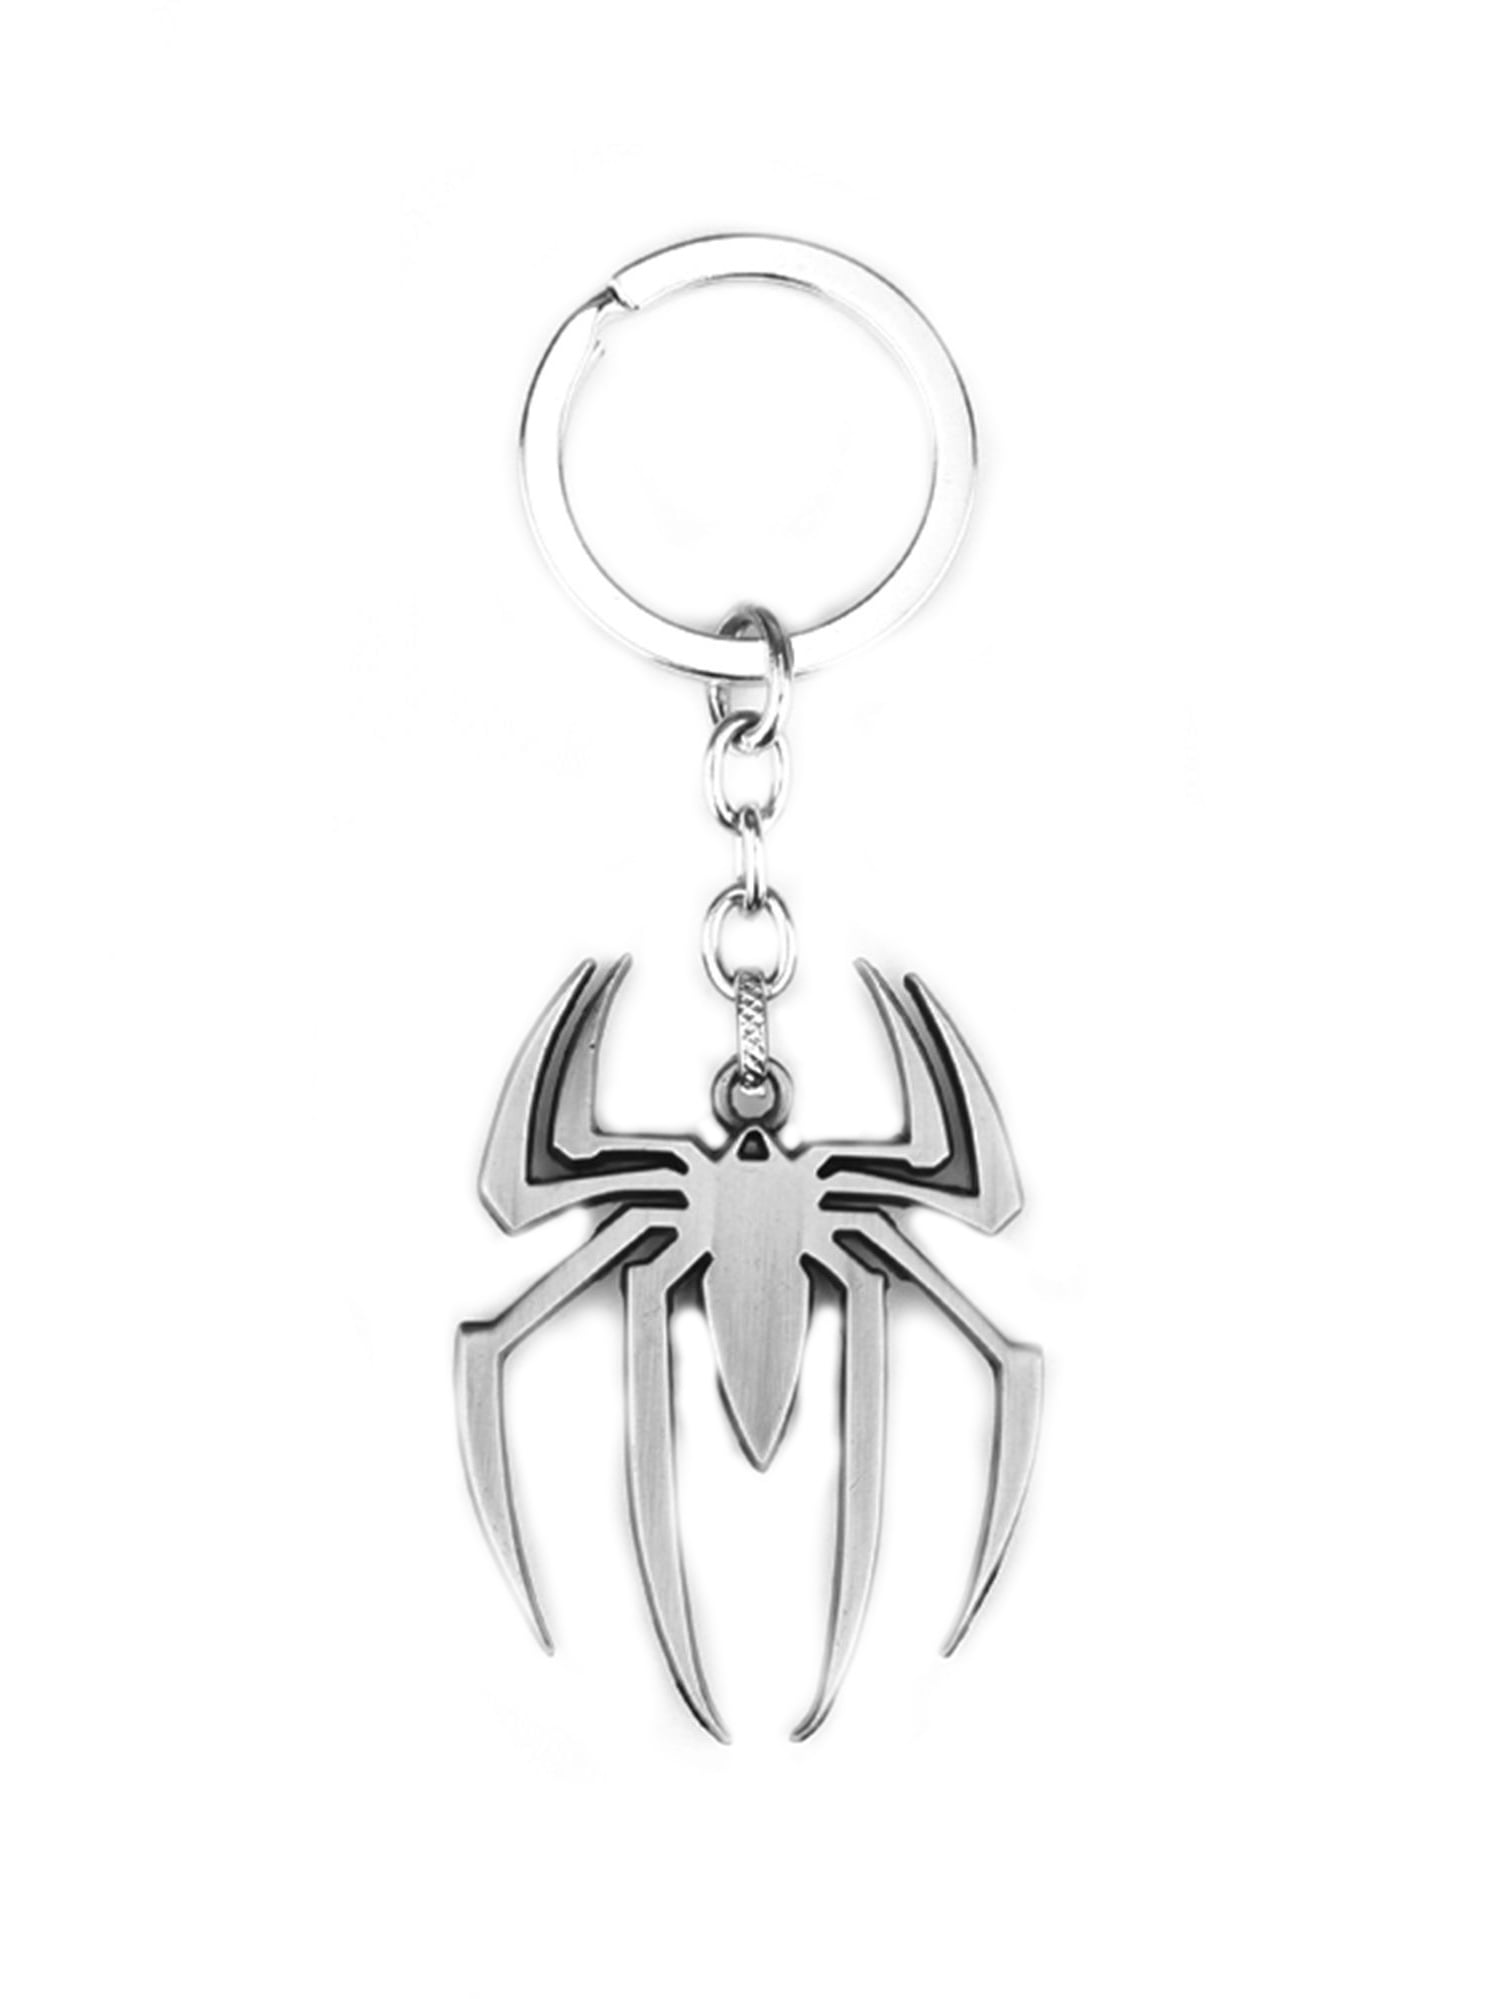 Marvel Comics Iron Man Key Chain Unisex Keychains Sided Rotation Key Ring Gifts 